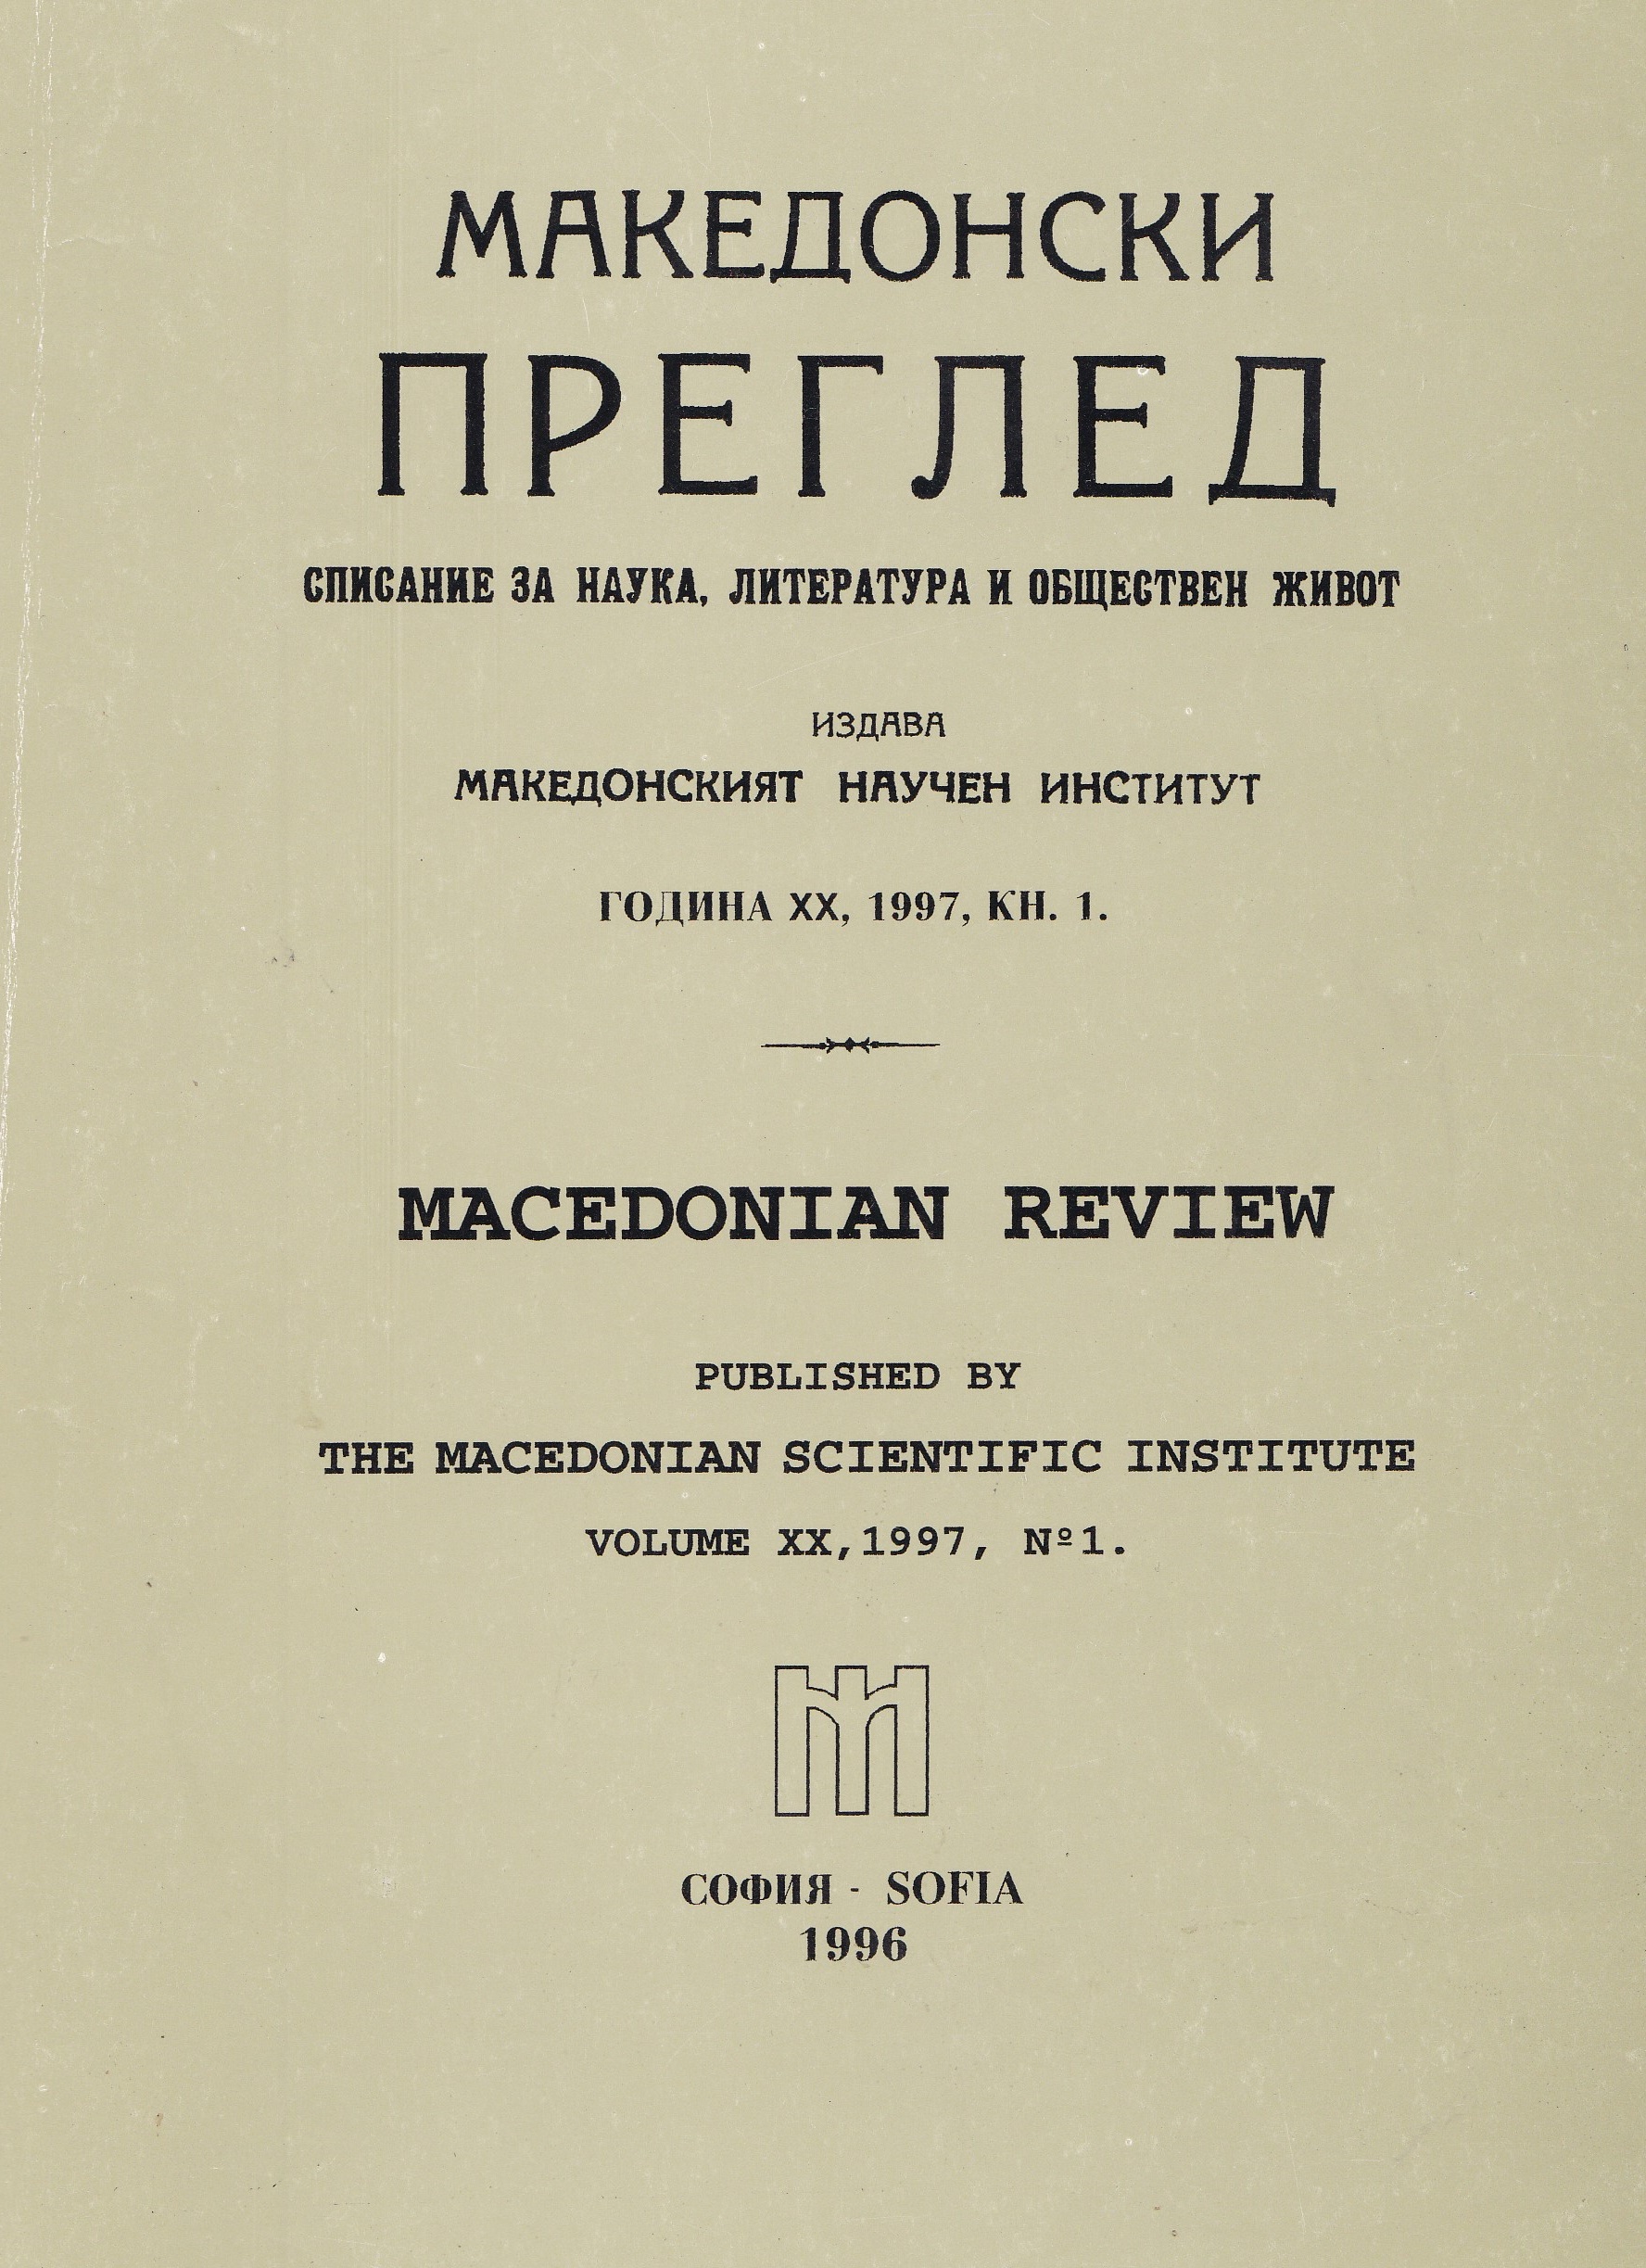 Mladen Srbinovski. The Augean Stables of Macedonia. Skopje. Vreme Publishers. 1995. 186 pp. Cover Image